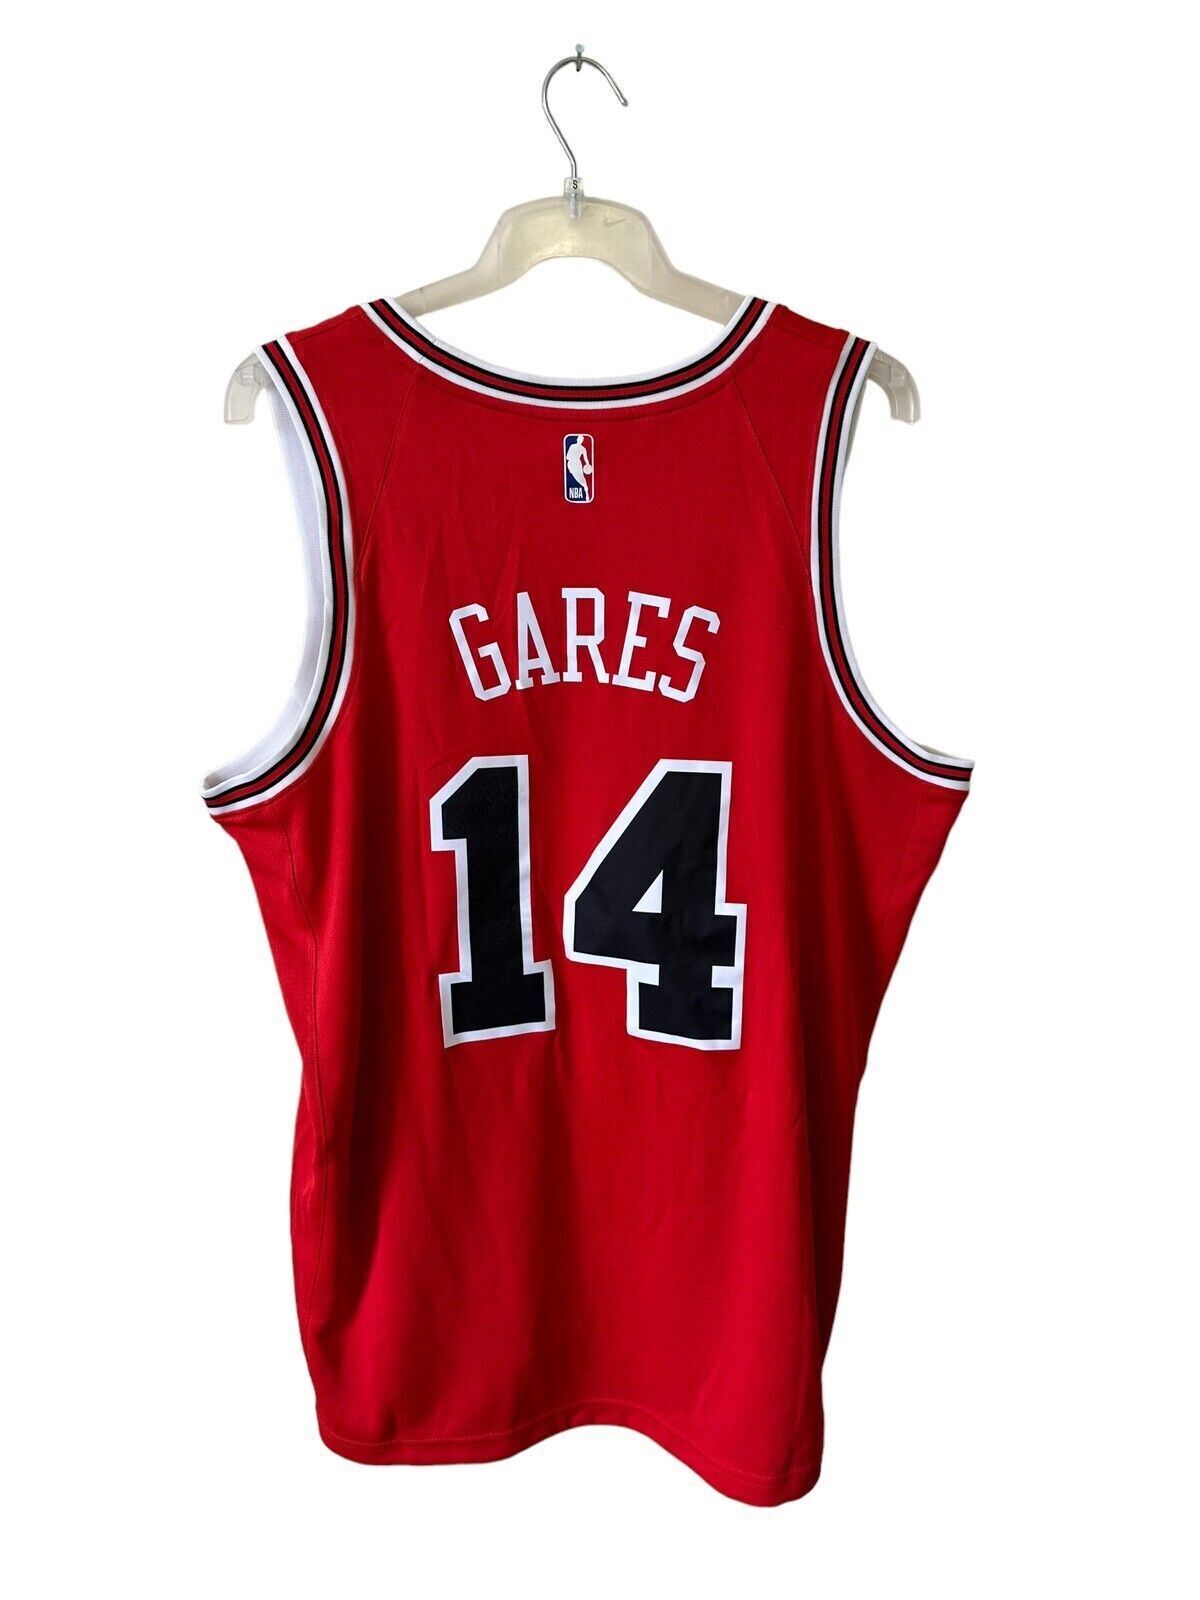 Nike NBA Chicago Bulls Icon Edition Jersey GARES 14 Basketball Mens XL